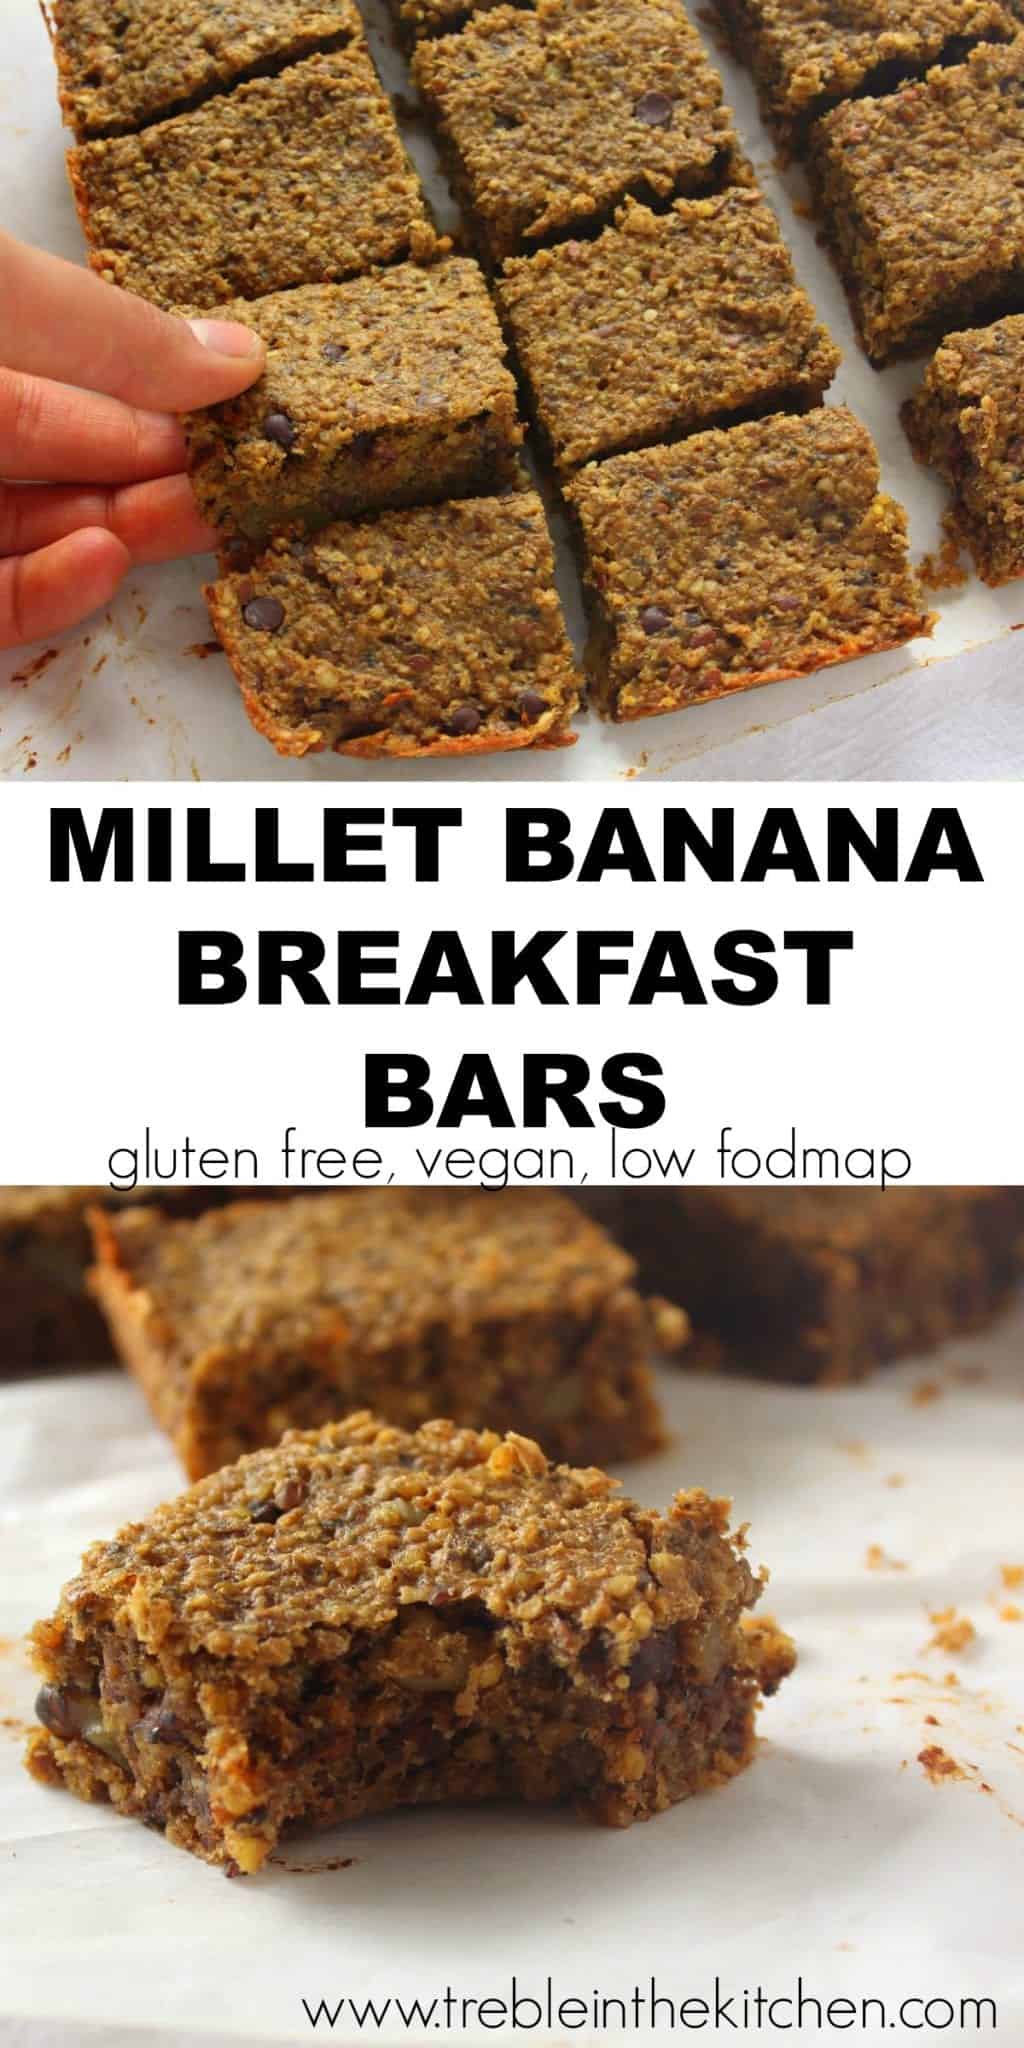 Millet Banana Breakfast Bars | Treble in the Kitchen